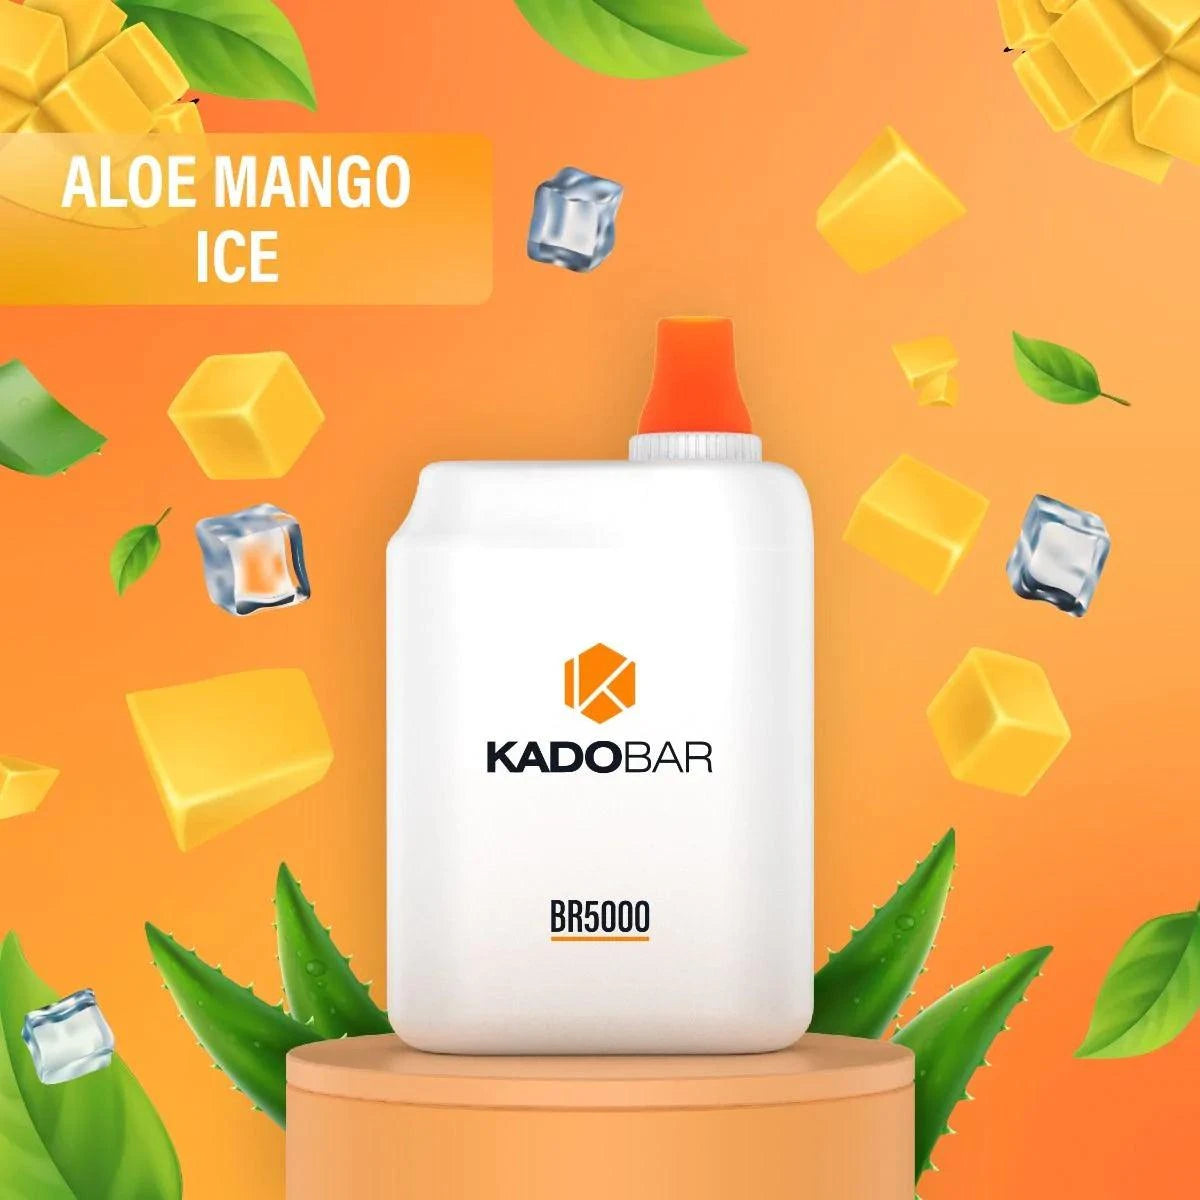 Kado Bar 5000 Puffs Disposable Vape - 6 Pack